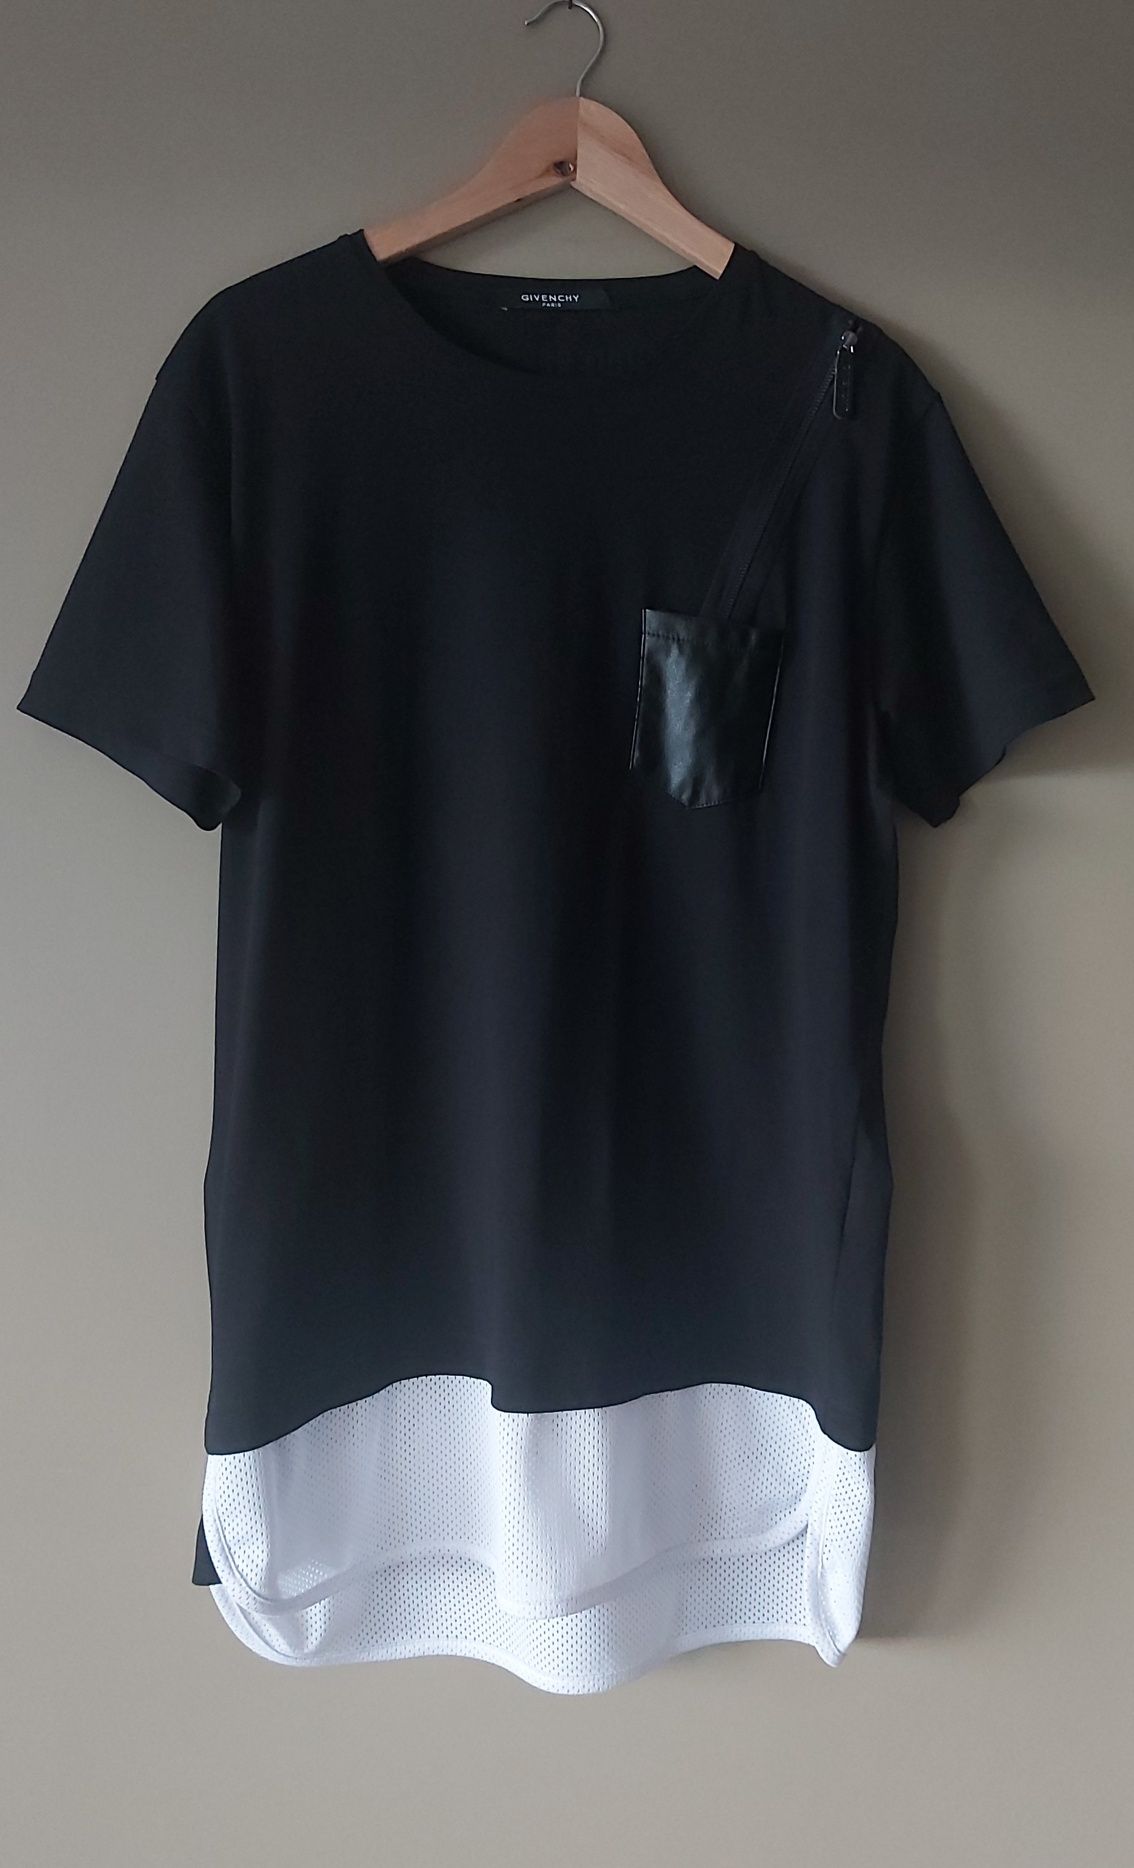 Givenchy męski t-shirt koszulka rozmiar L/XL